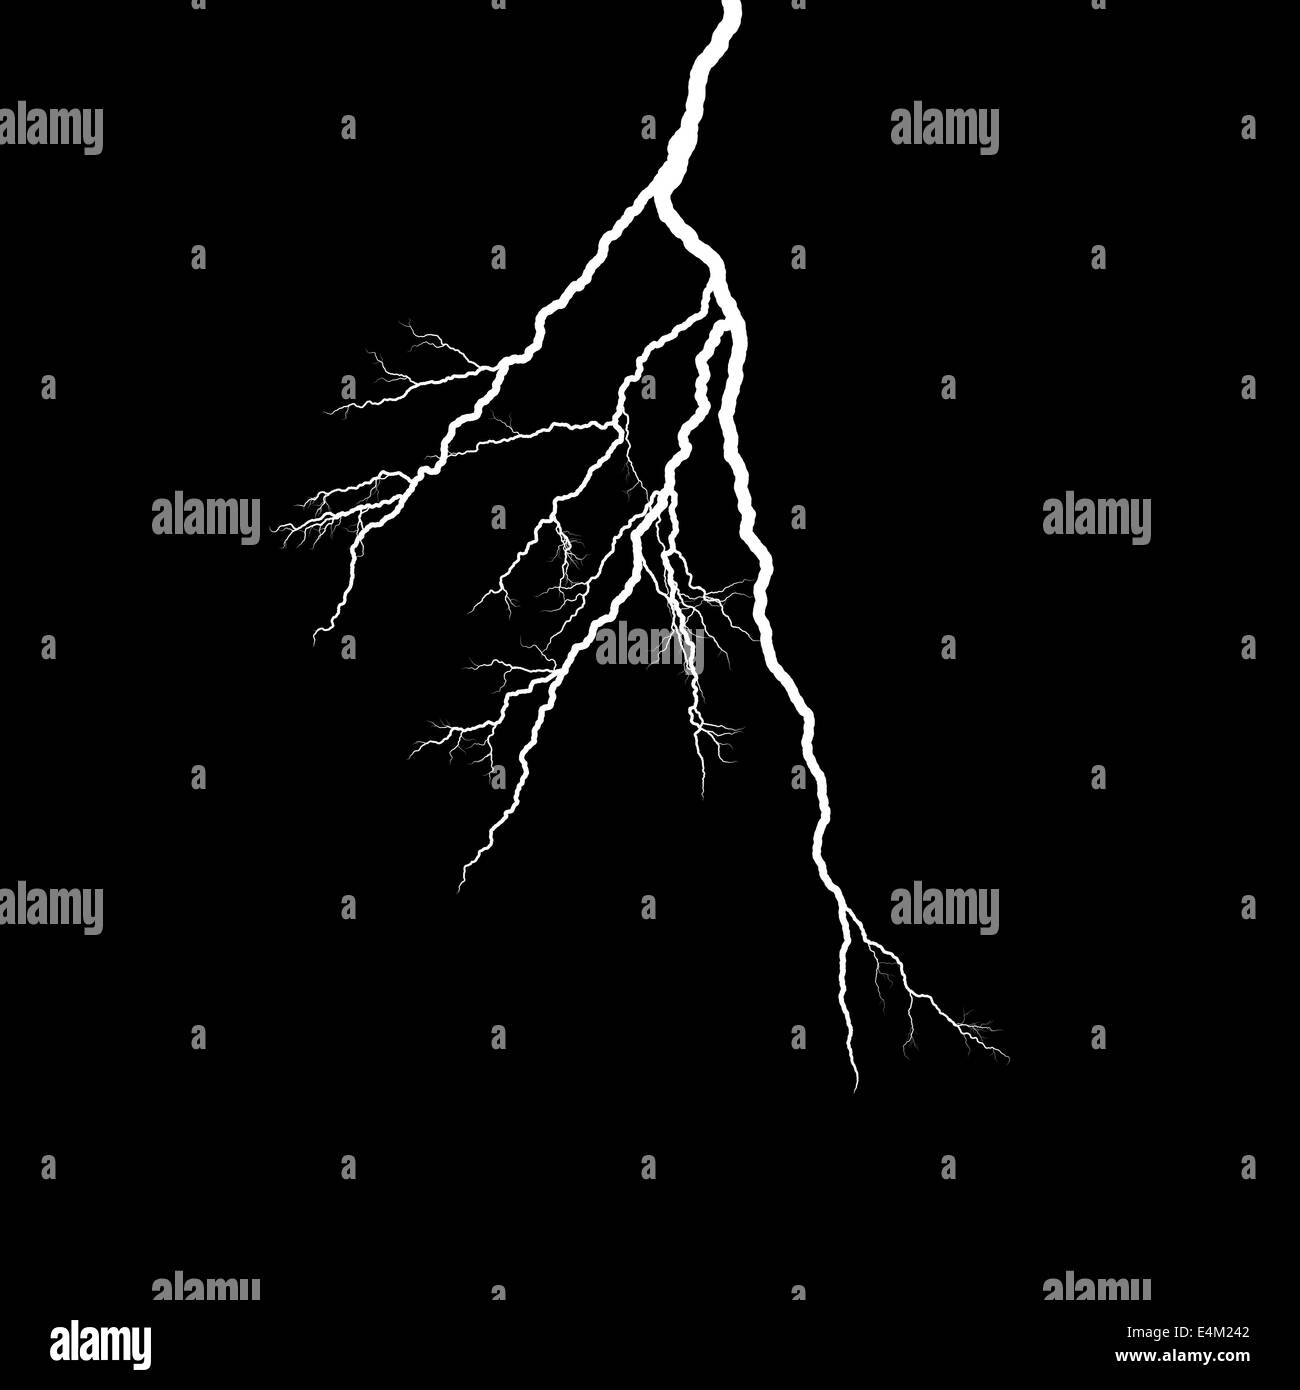 A lightning strike on the black background Stock Photo